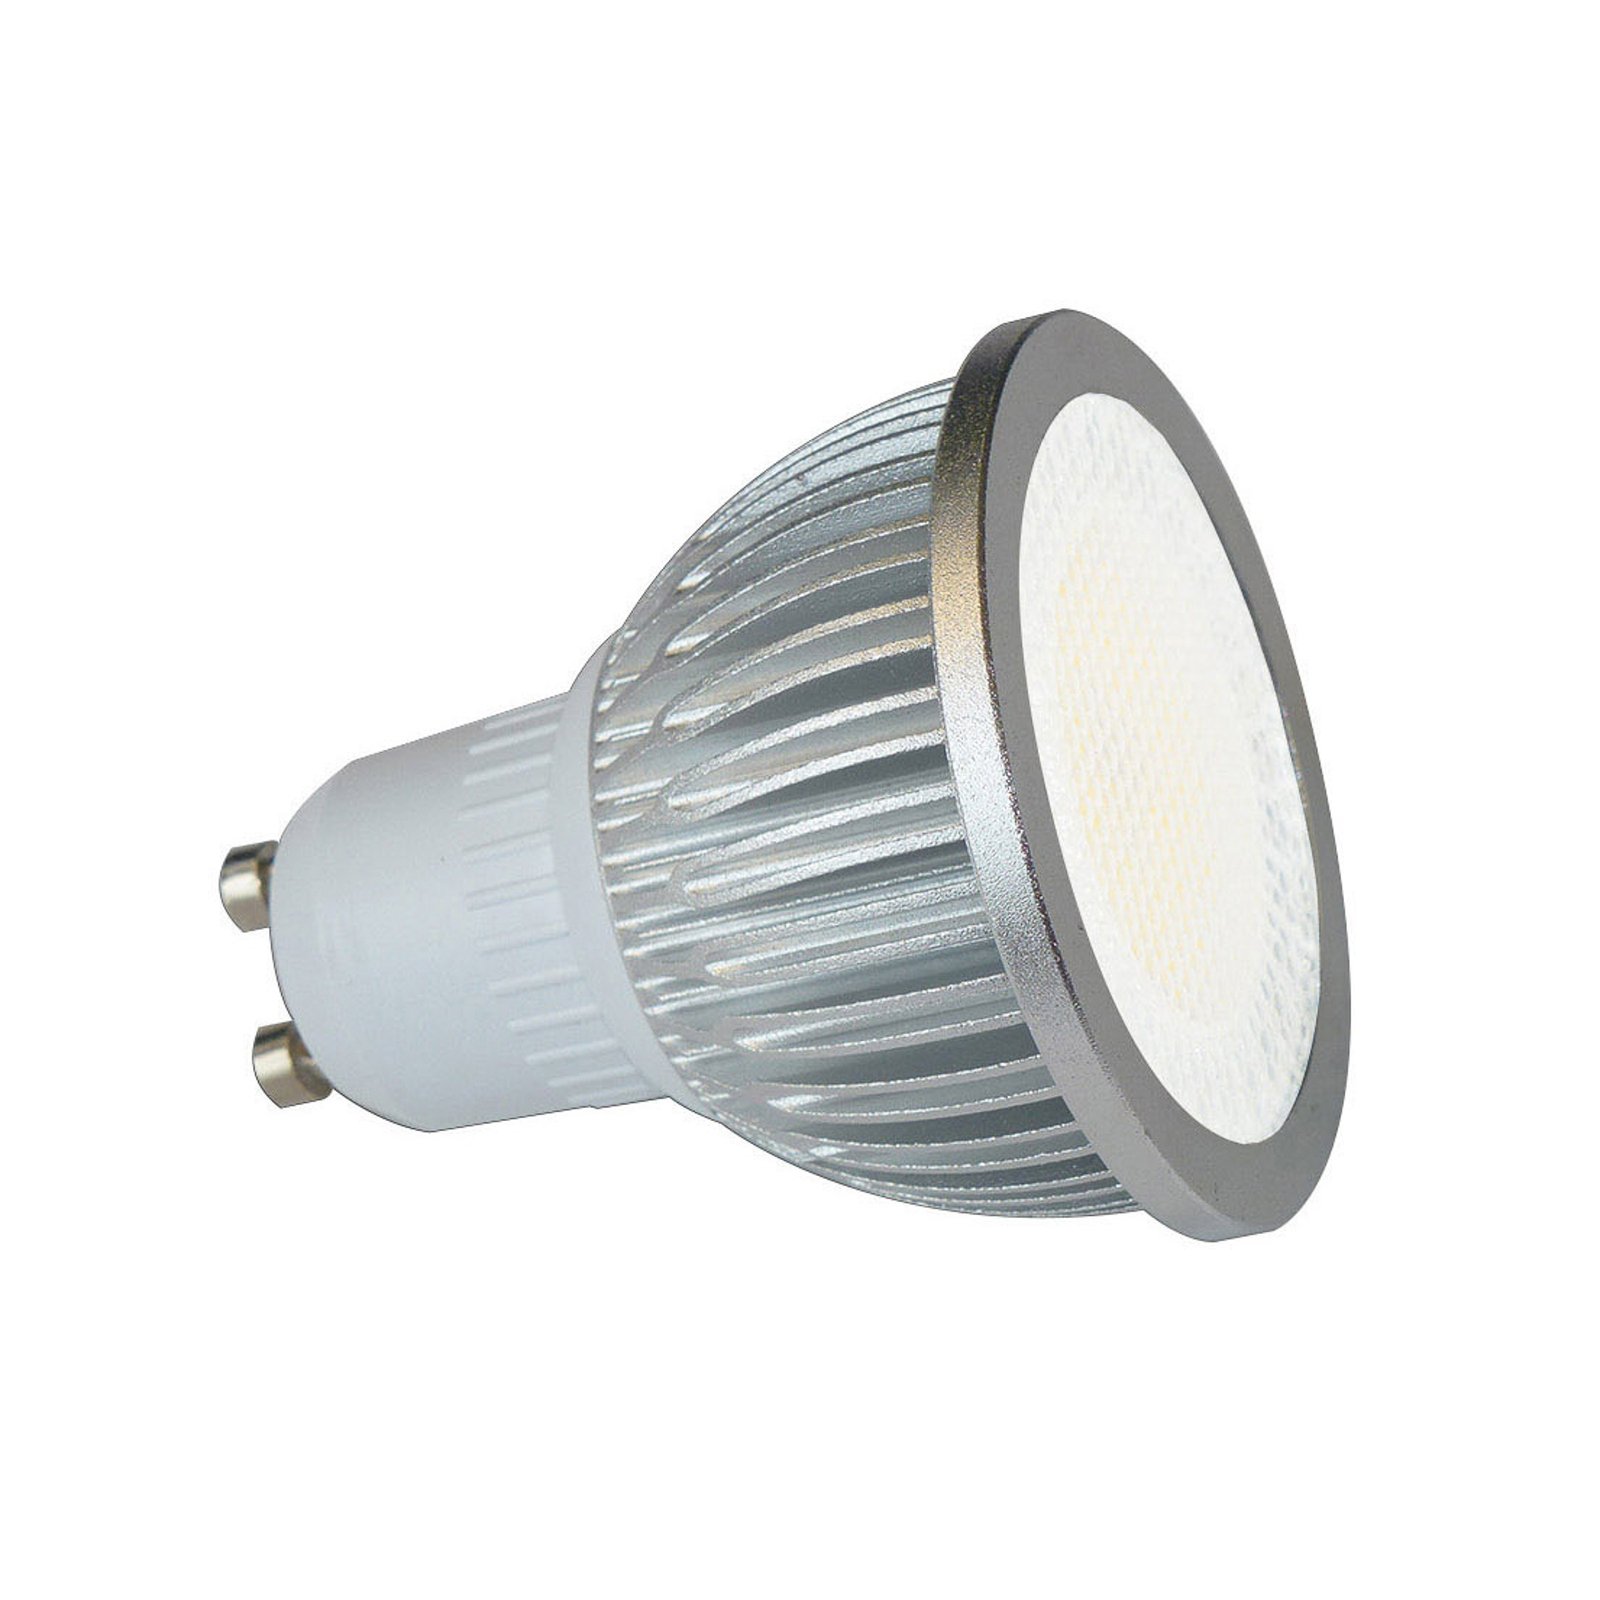 Conjunto de 6 reflectores LED de alta tensão GU10 5W 830 85°